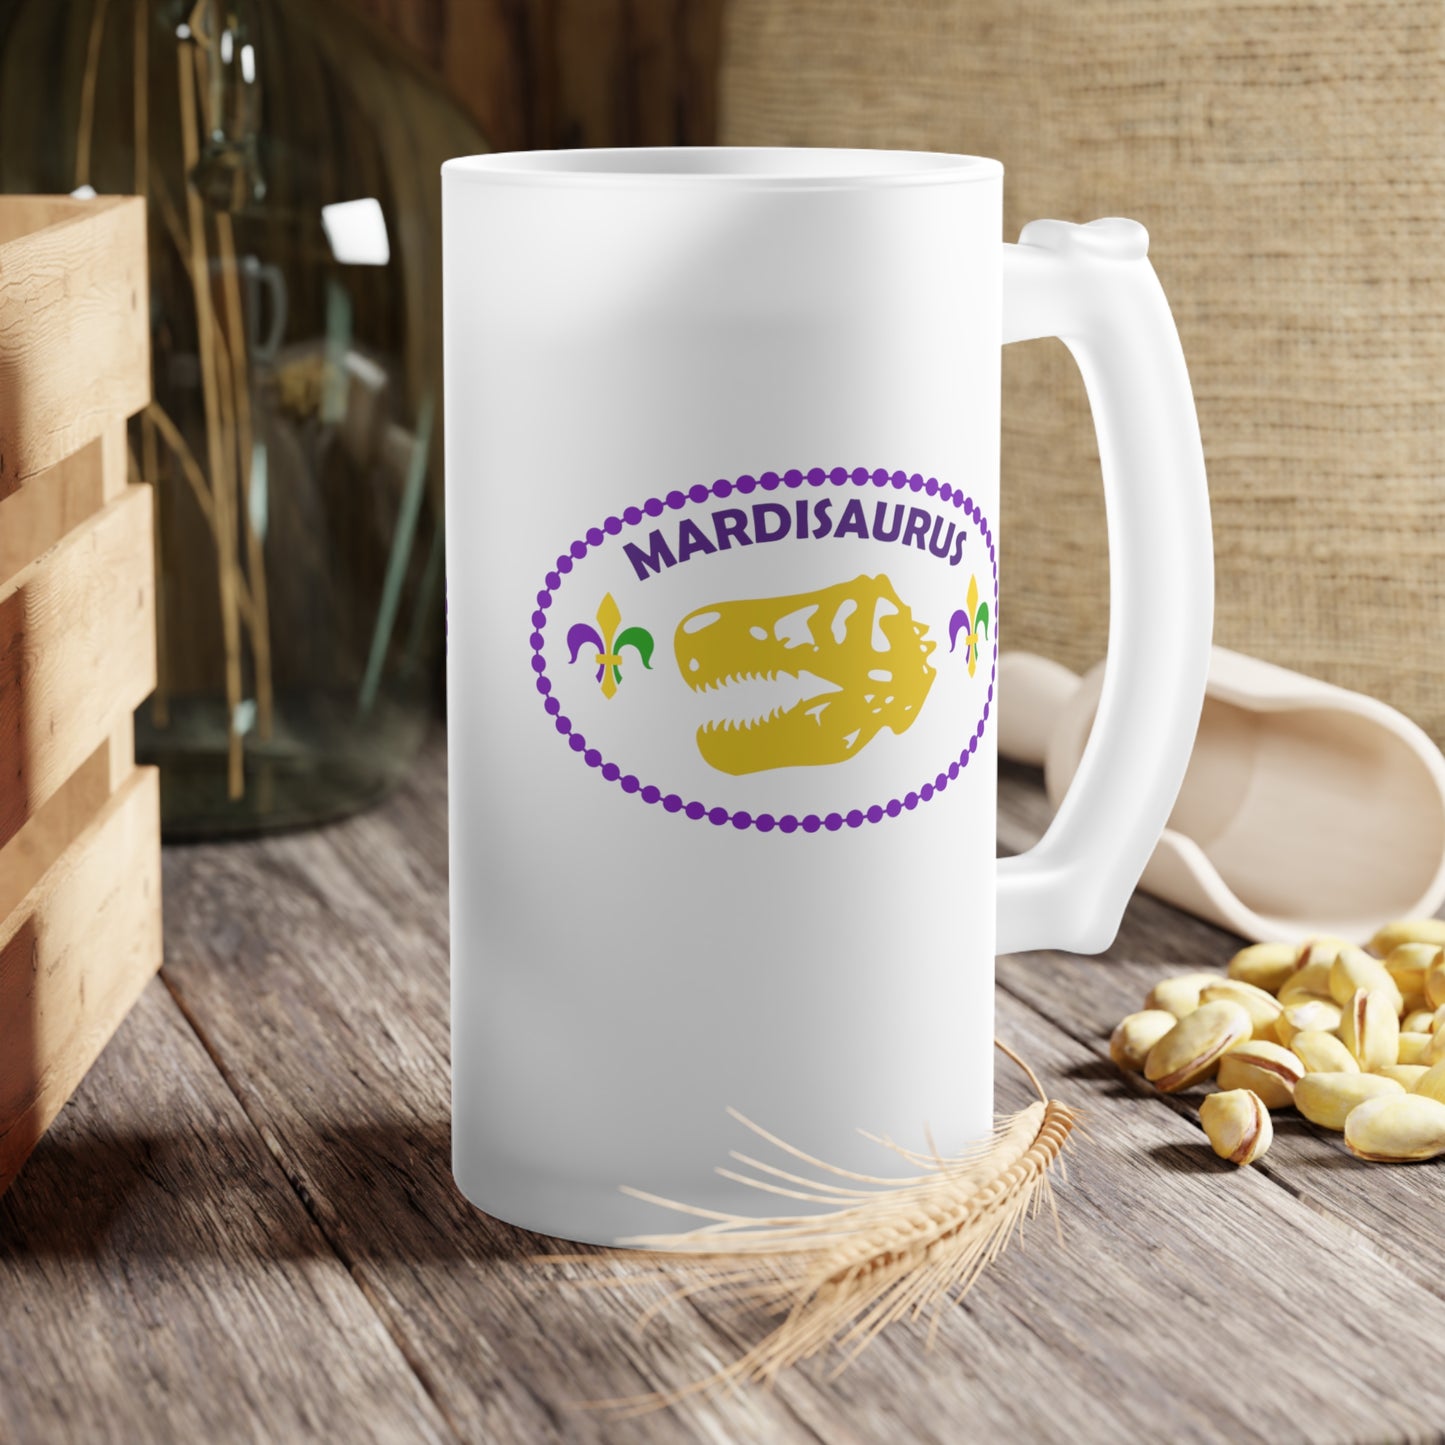 Mardisaurus Frosted Glass Beer Mug